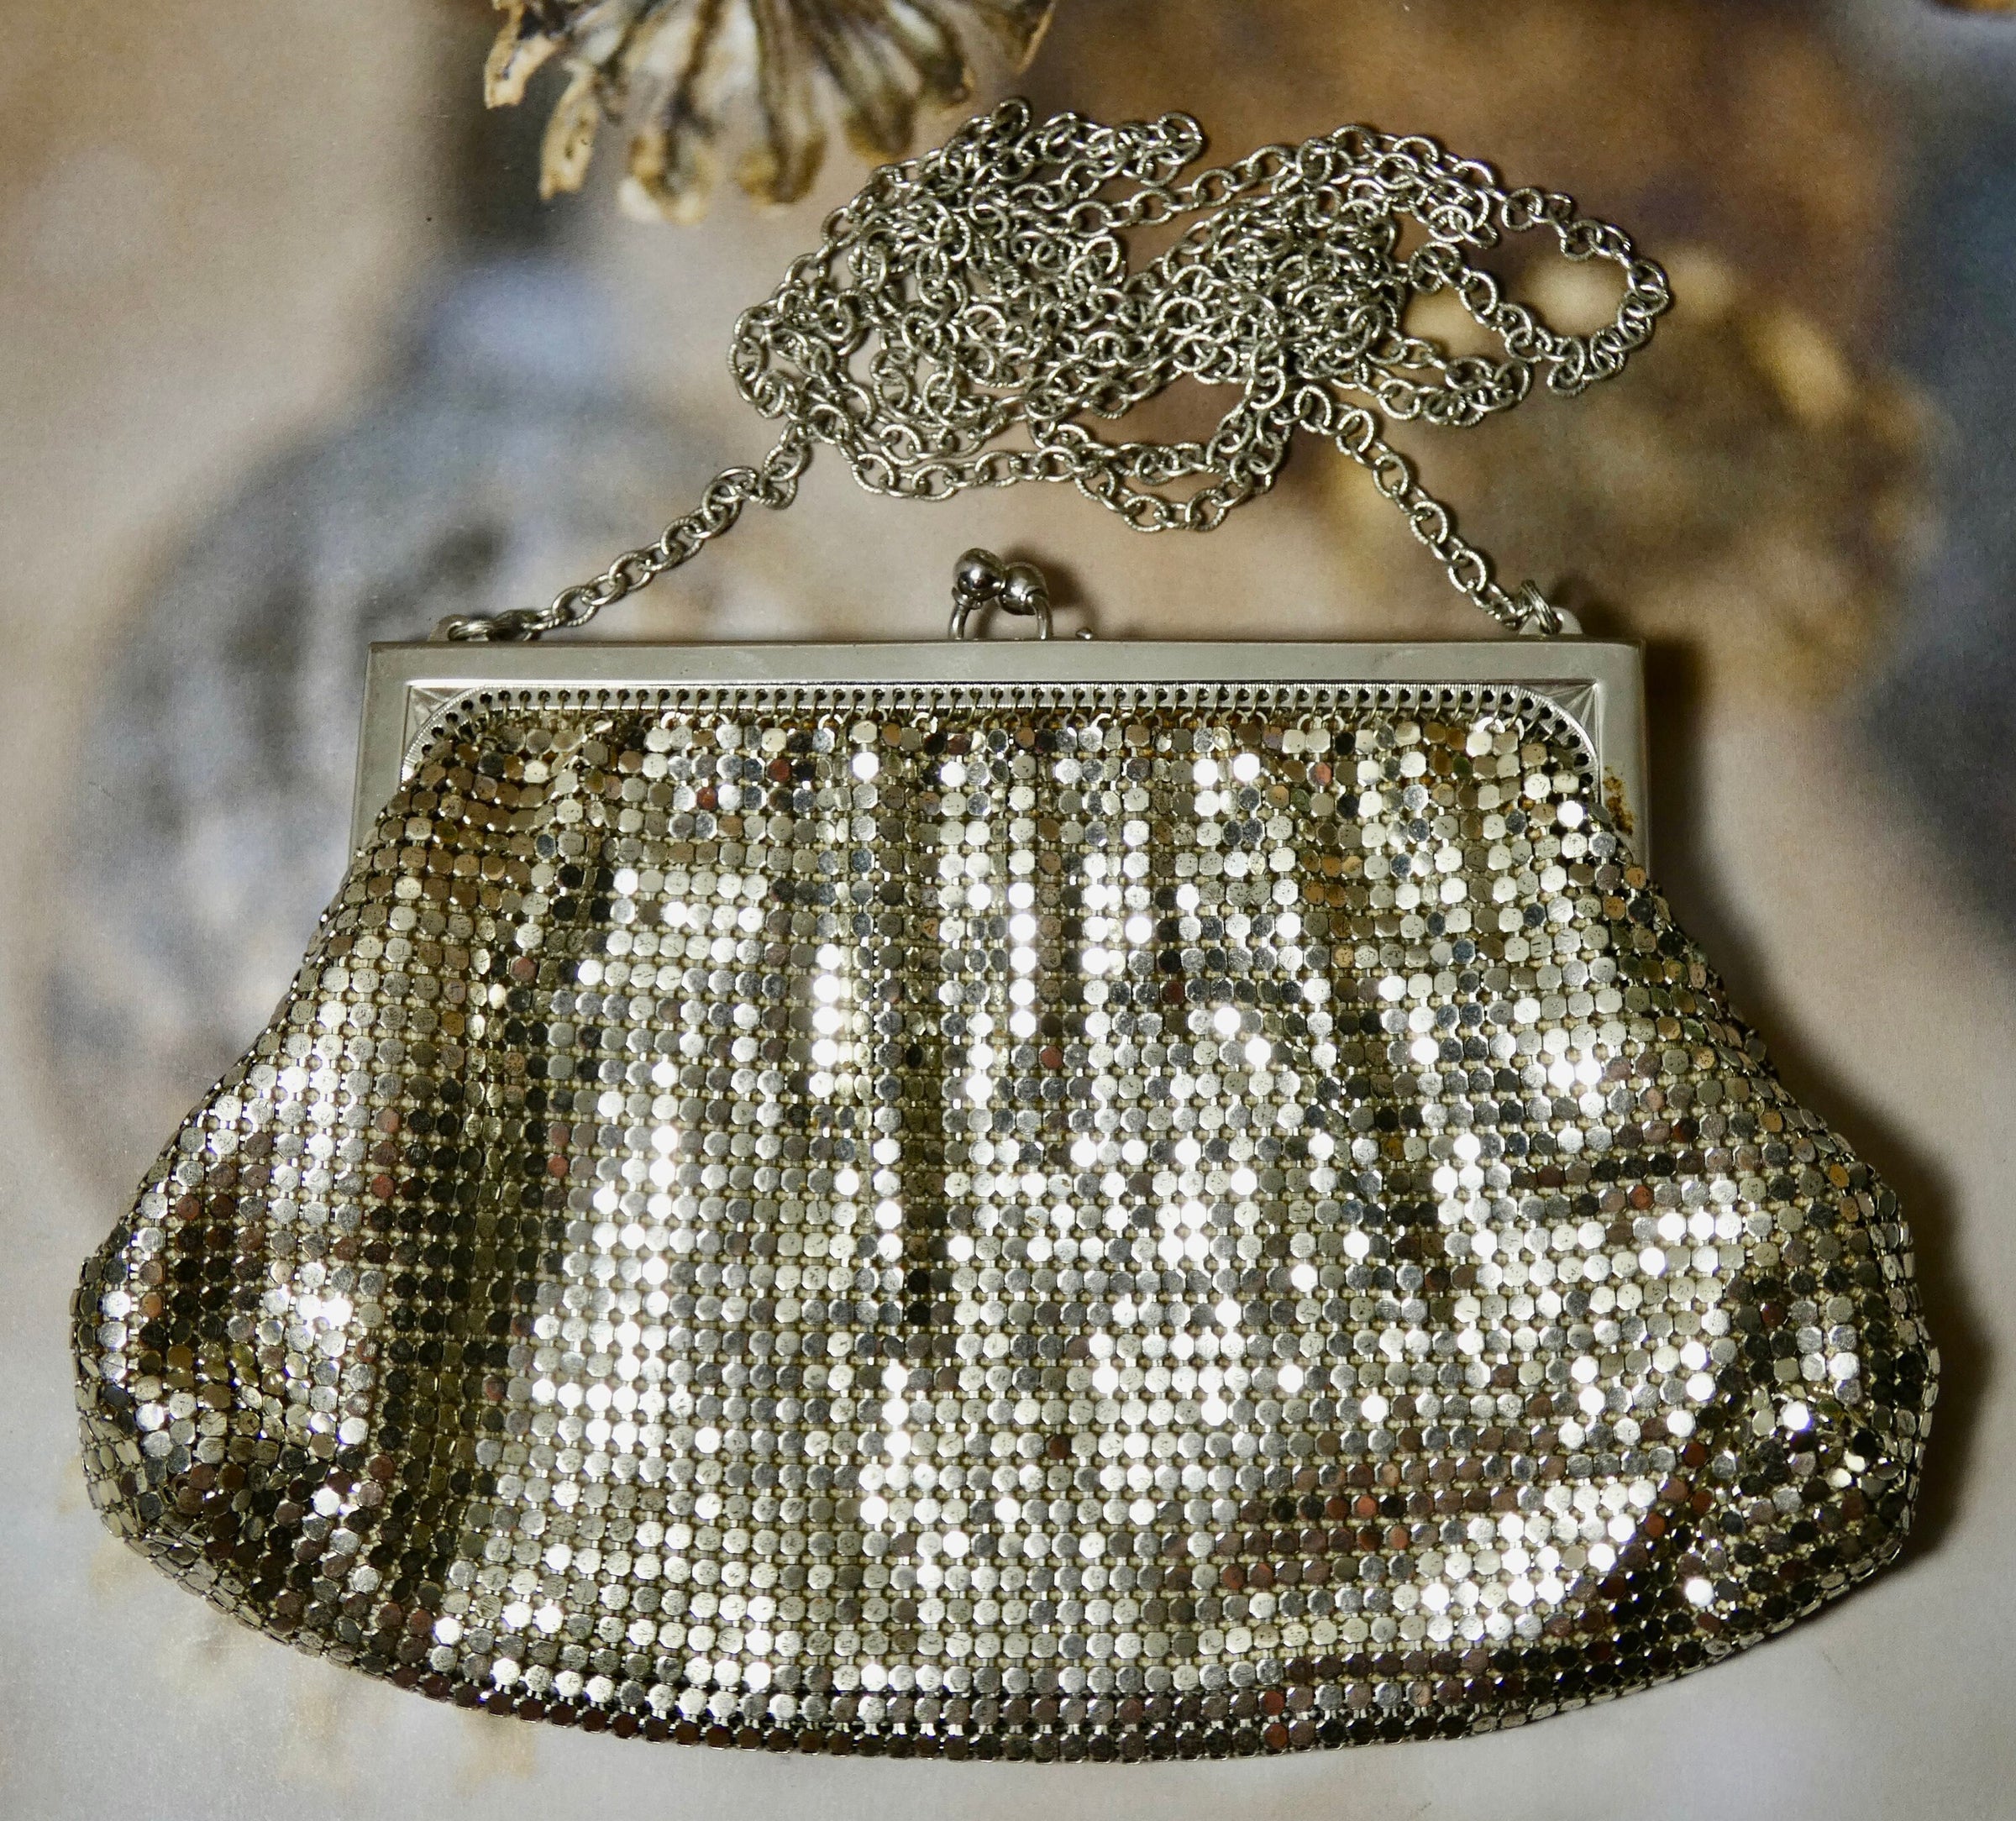 Vintage silver Whiting & Davis handbag chainmaille clutch